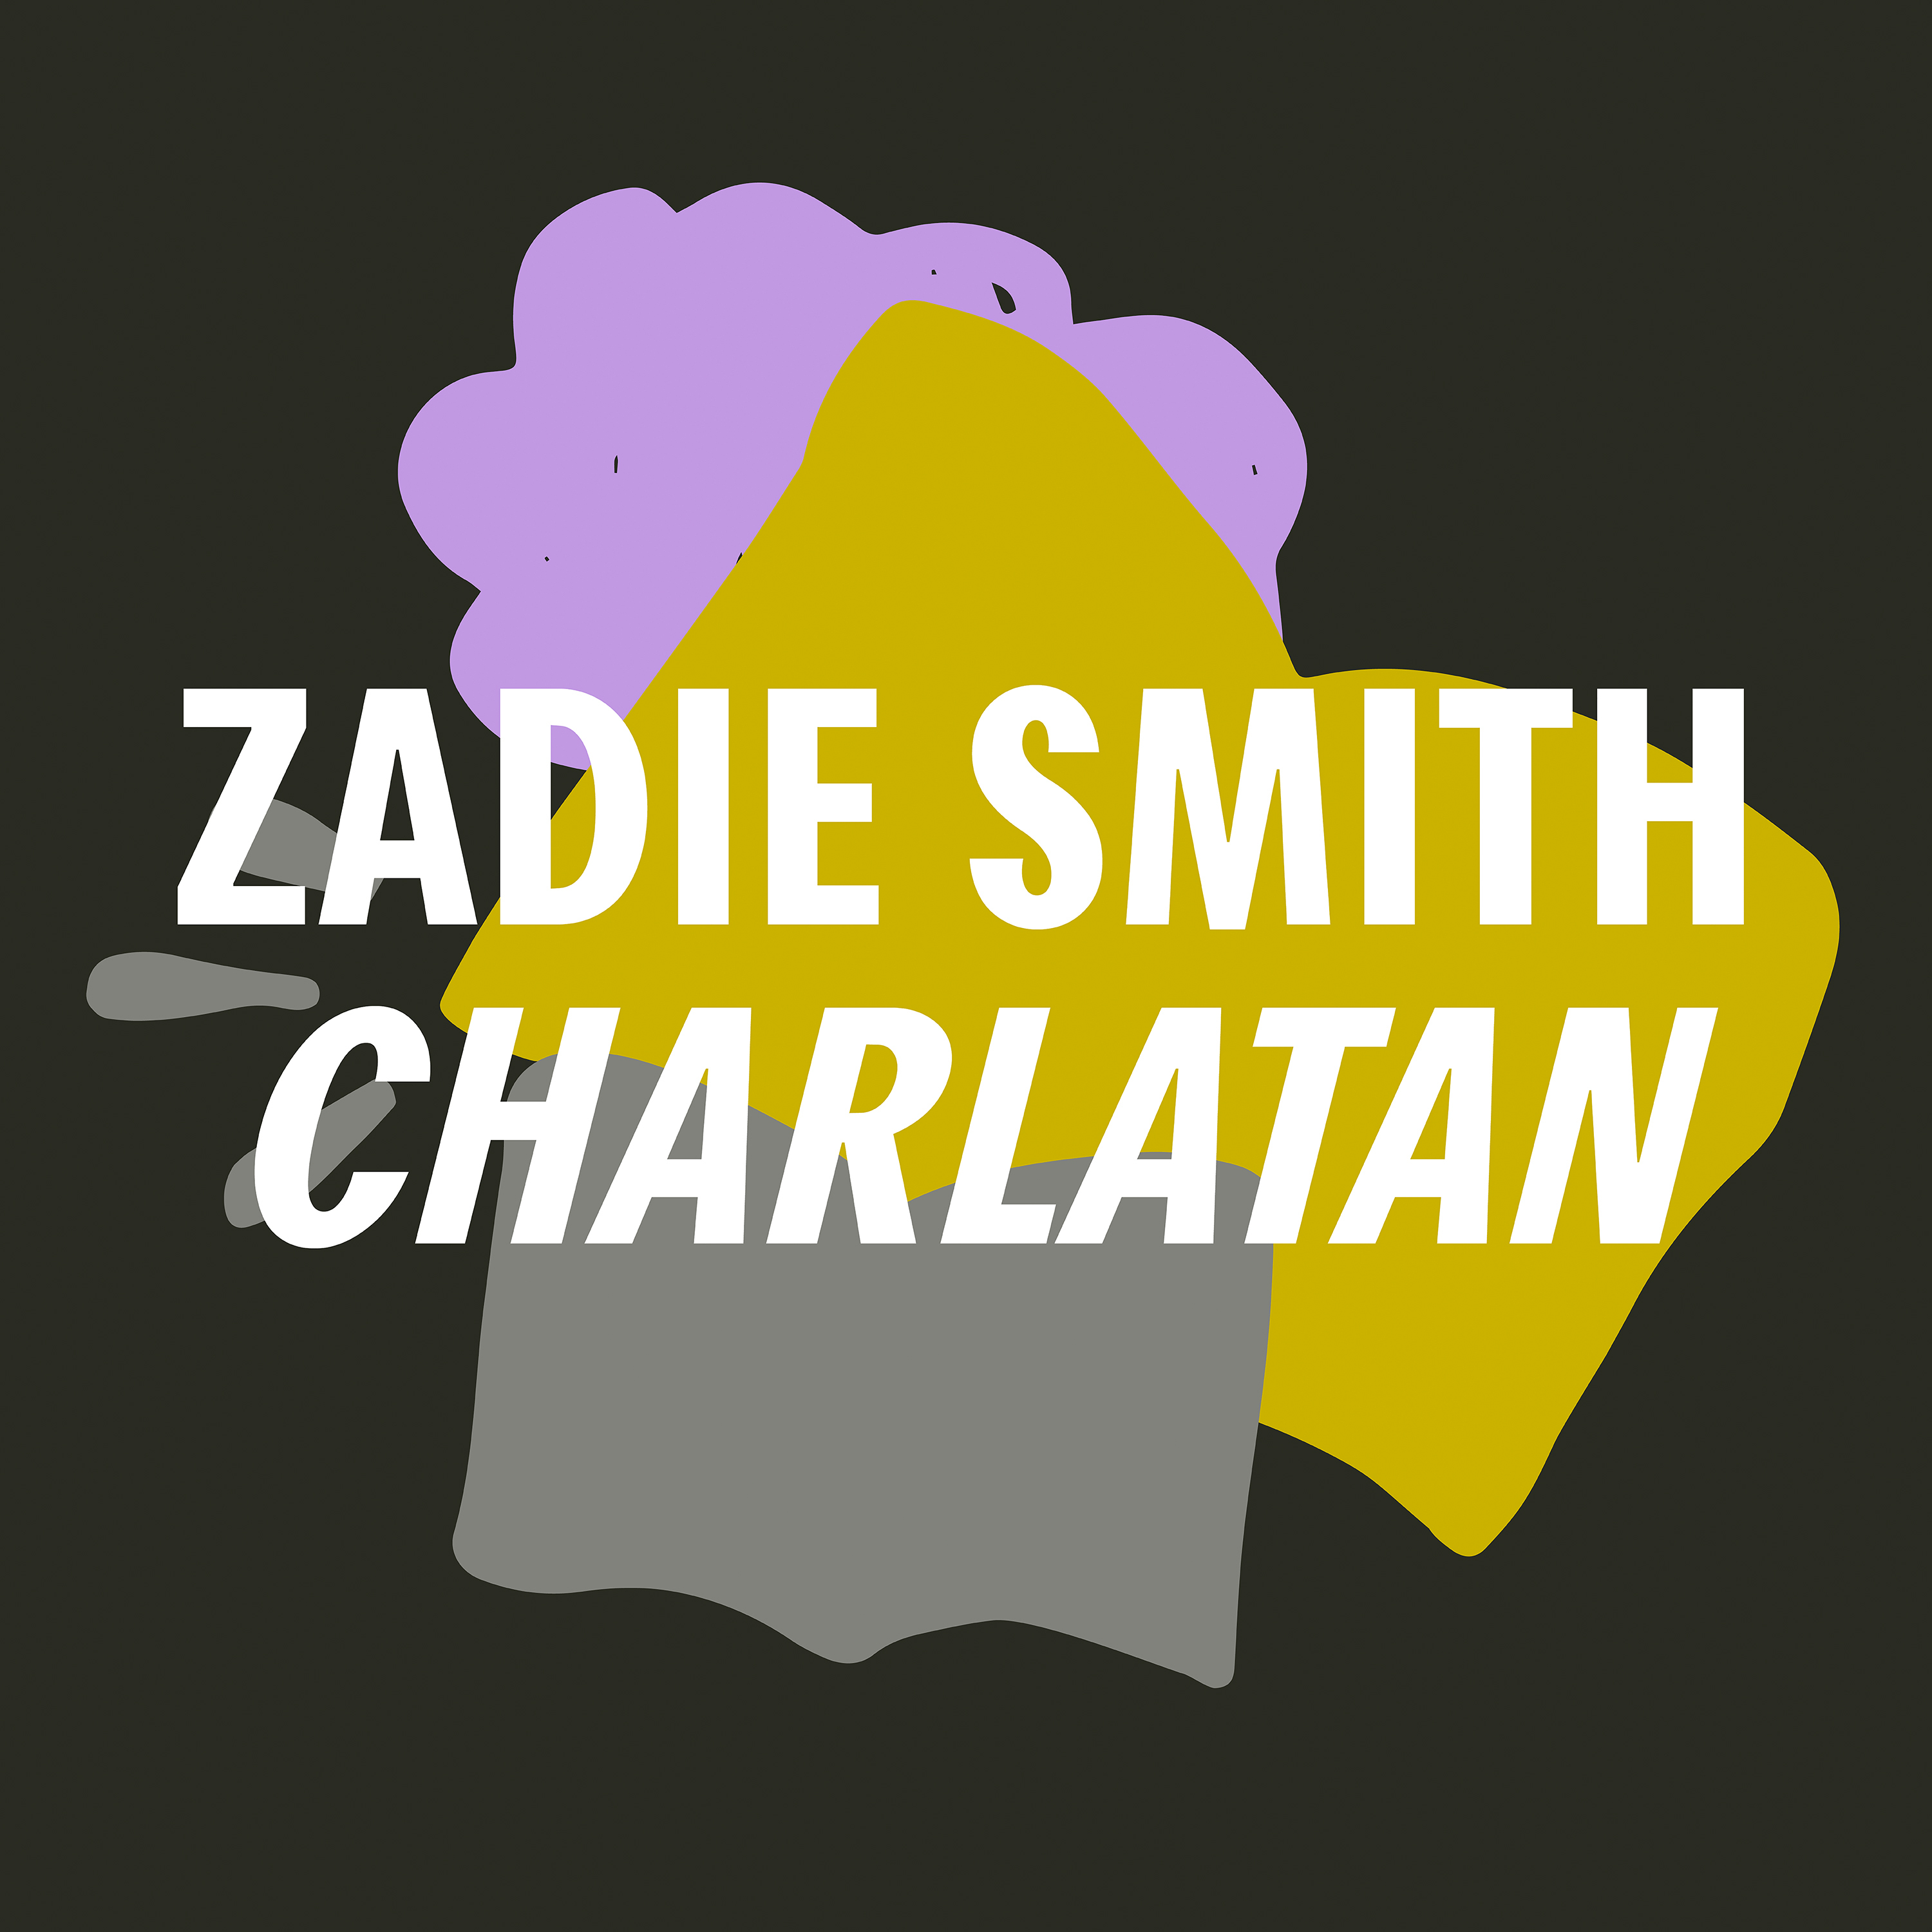 'Een groot bord stoofpot' | Zadie Smith - Charlatan